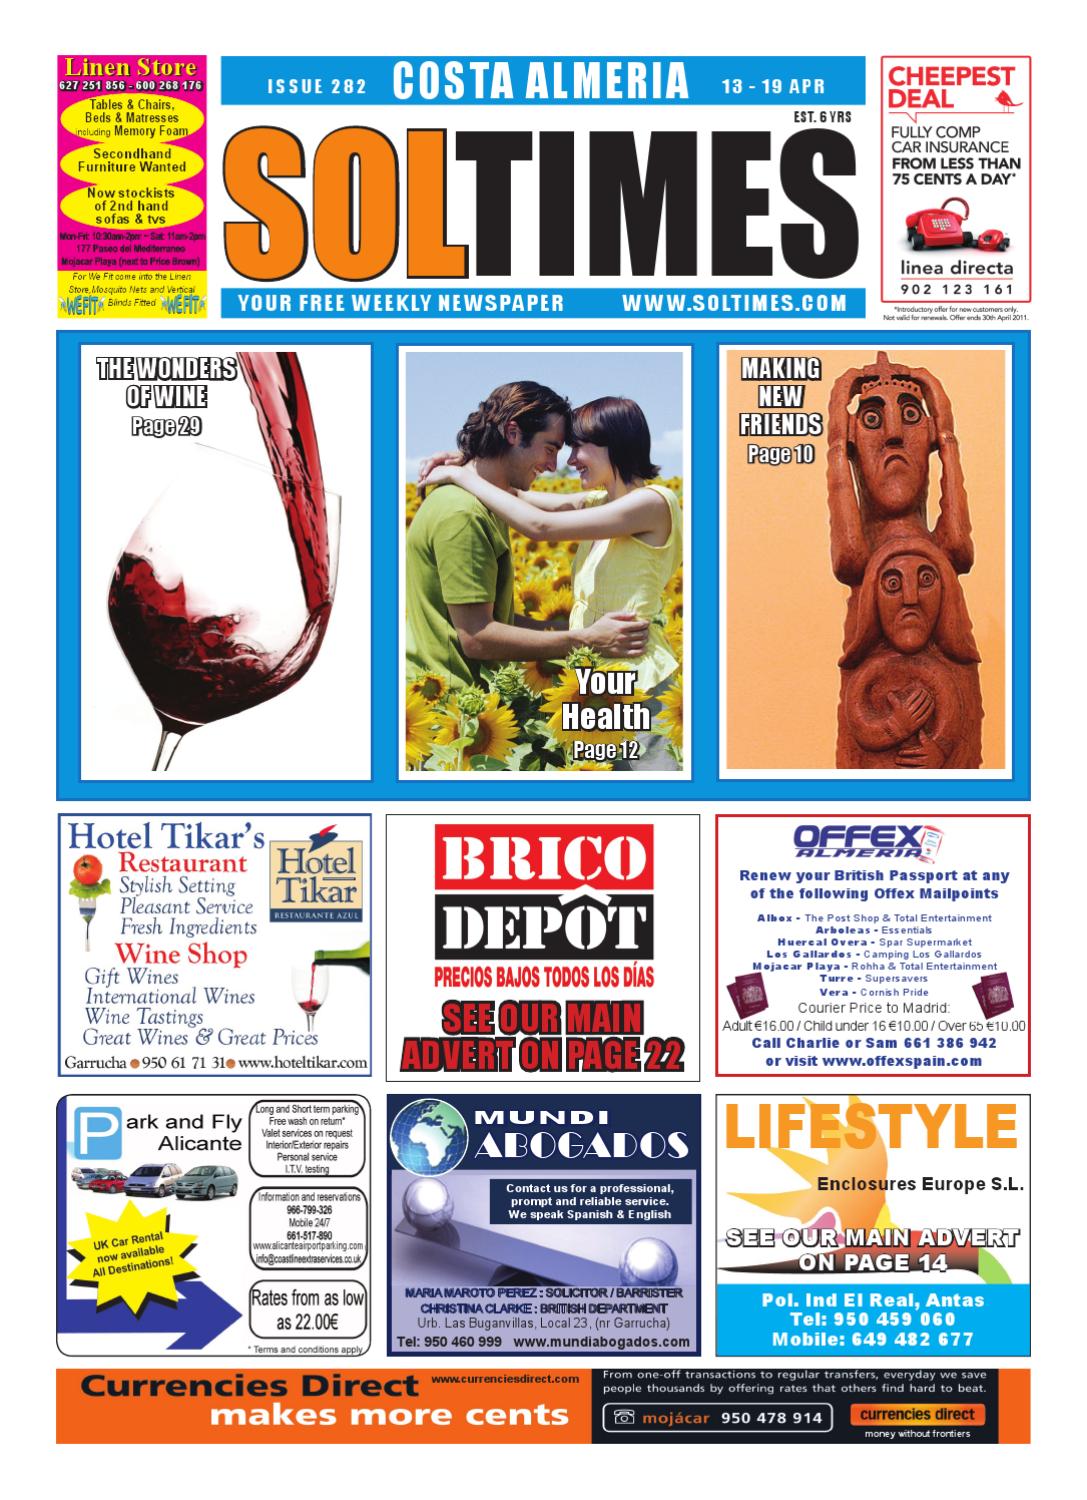 Pergola Brico Depot Charmant sol Times Newspaper issue 282 Costa Almeria Edition by Nigel